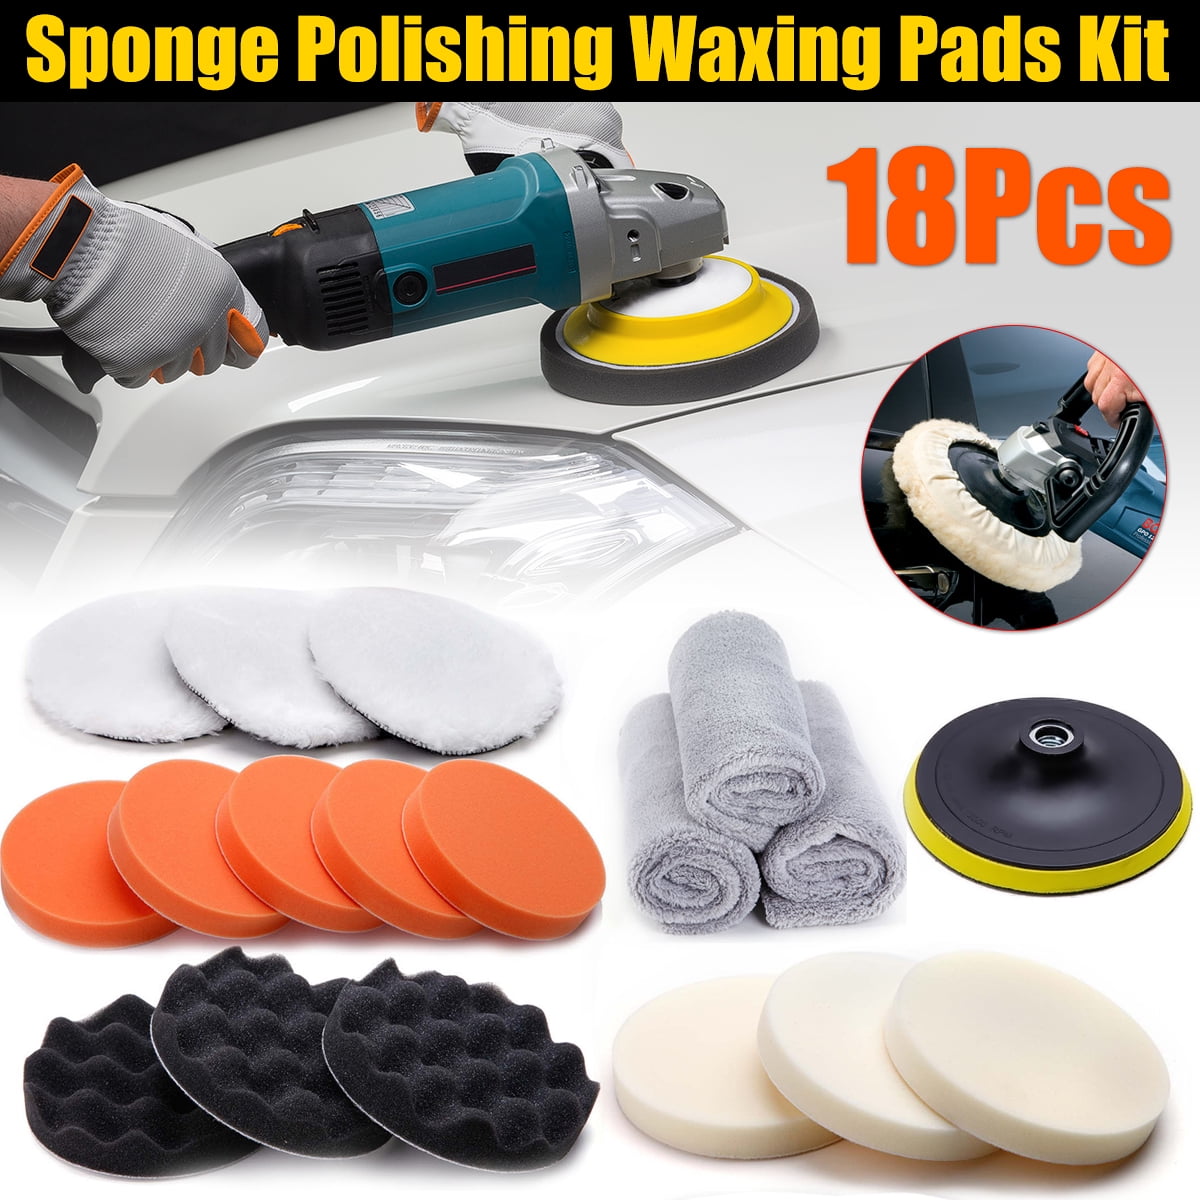 8PCS 3/4/5/6 inch Buffing Sponge Polishing Pad Kit Waxing for Car Polisher Tools 